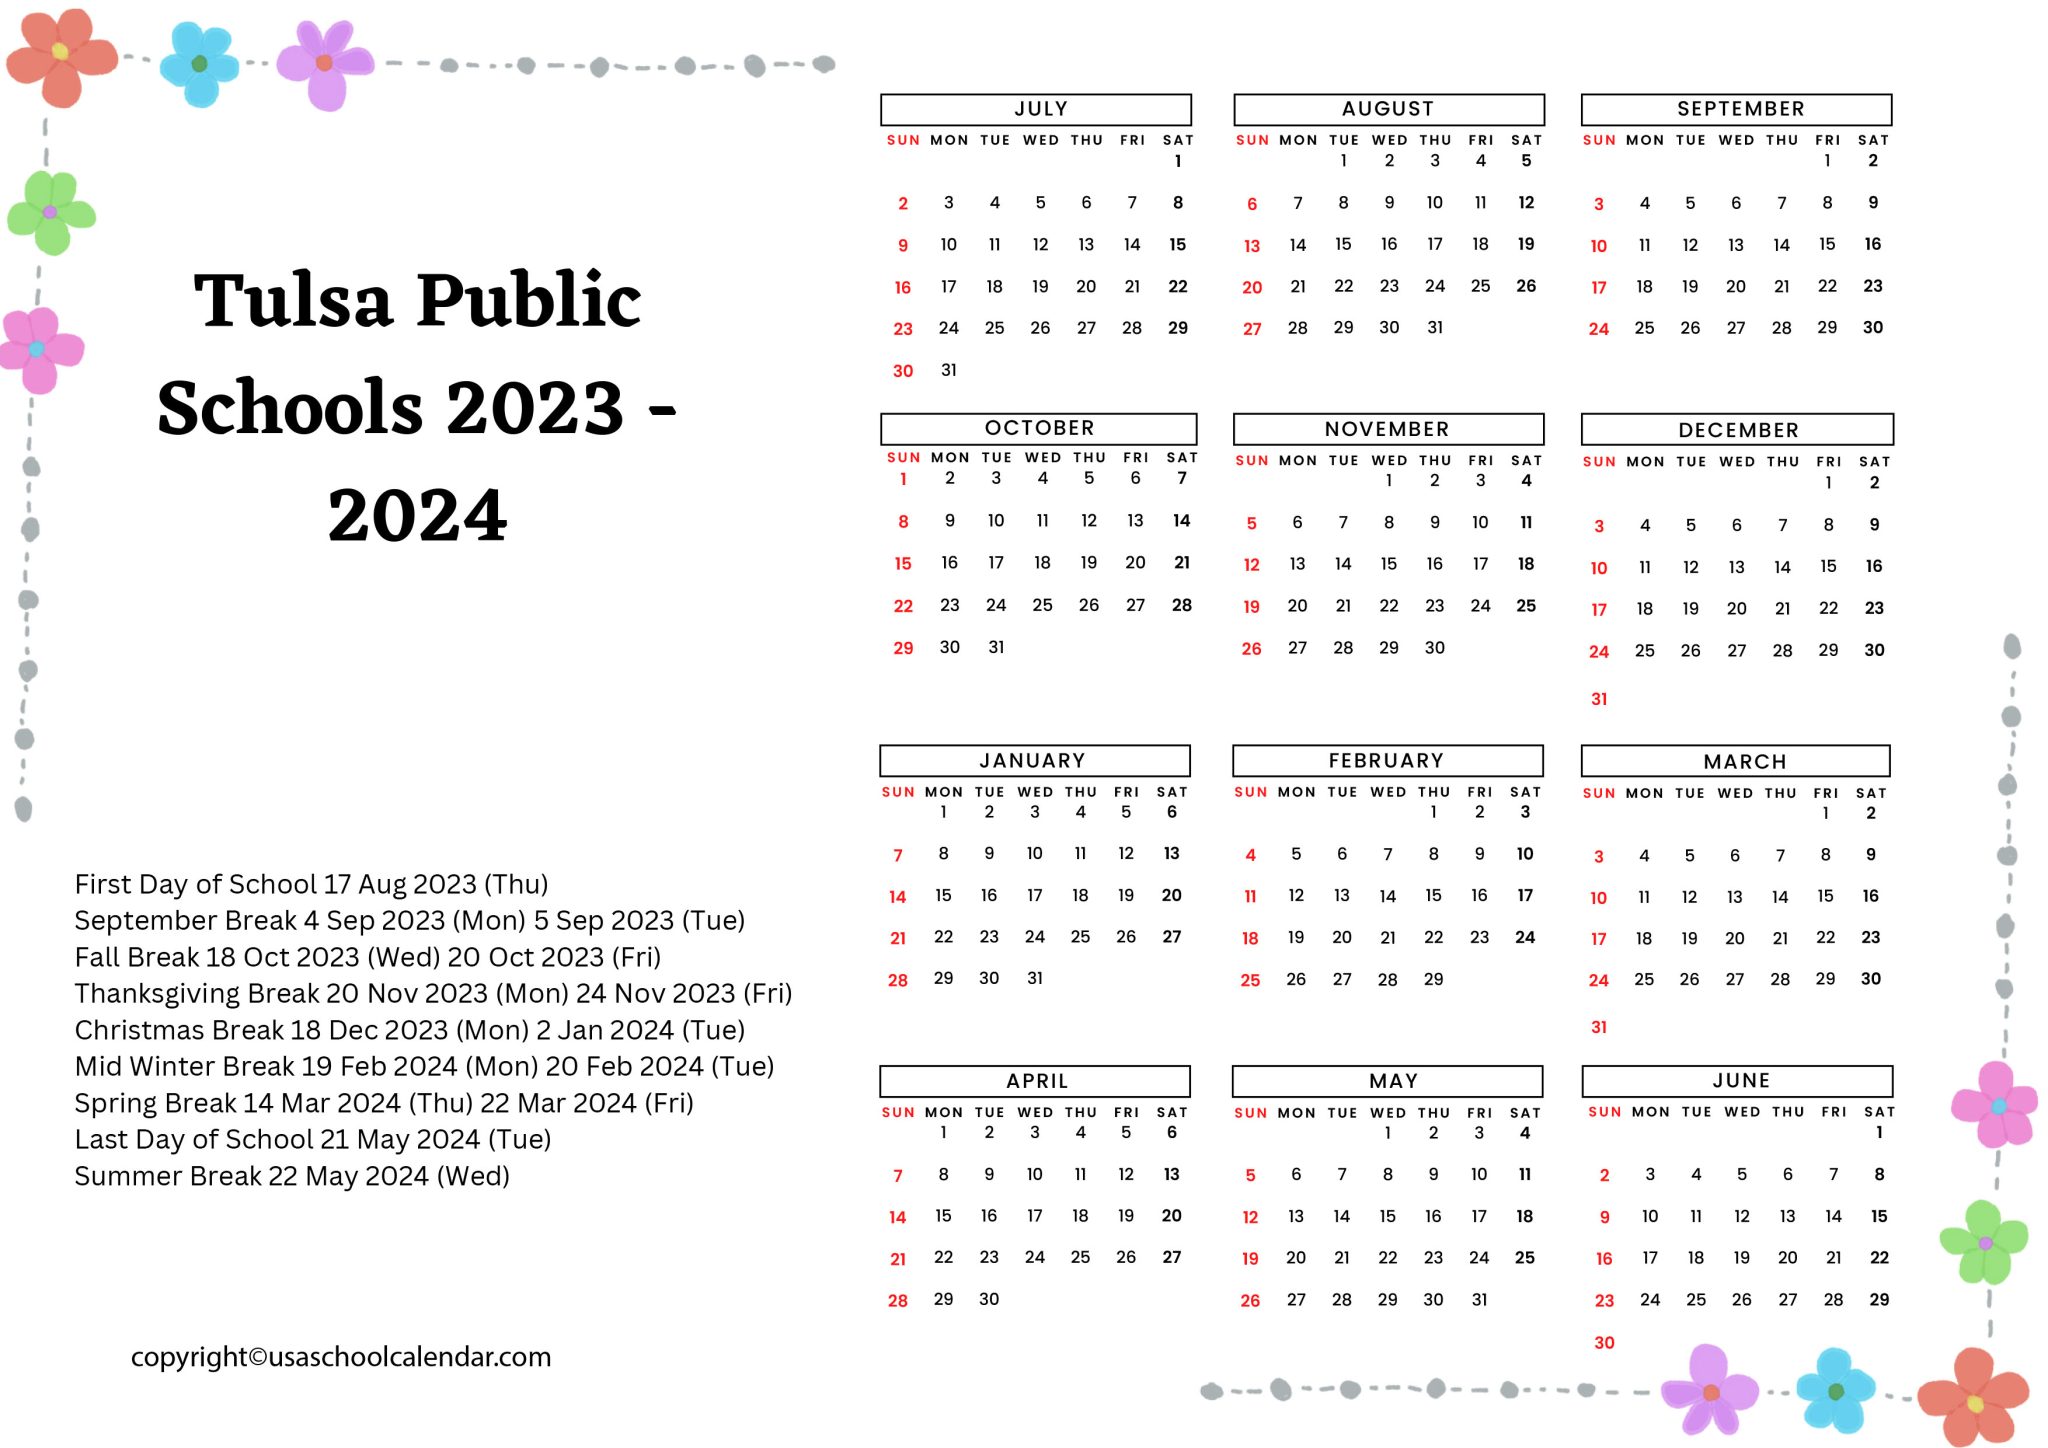 Tulsa Public Schools Calendar Holidays 2023 2024